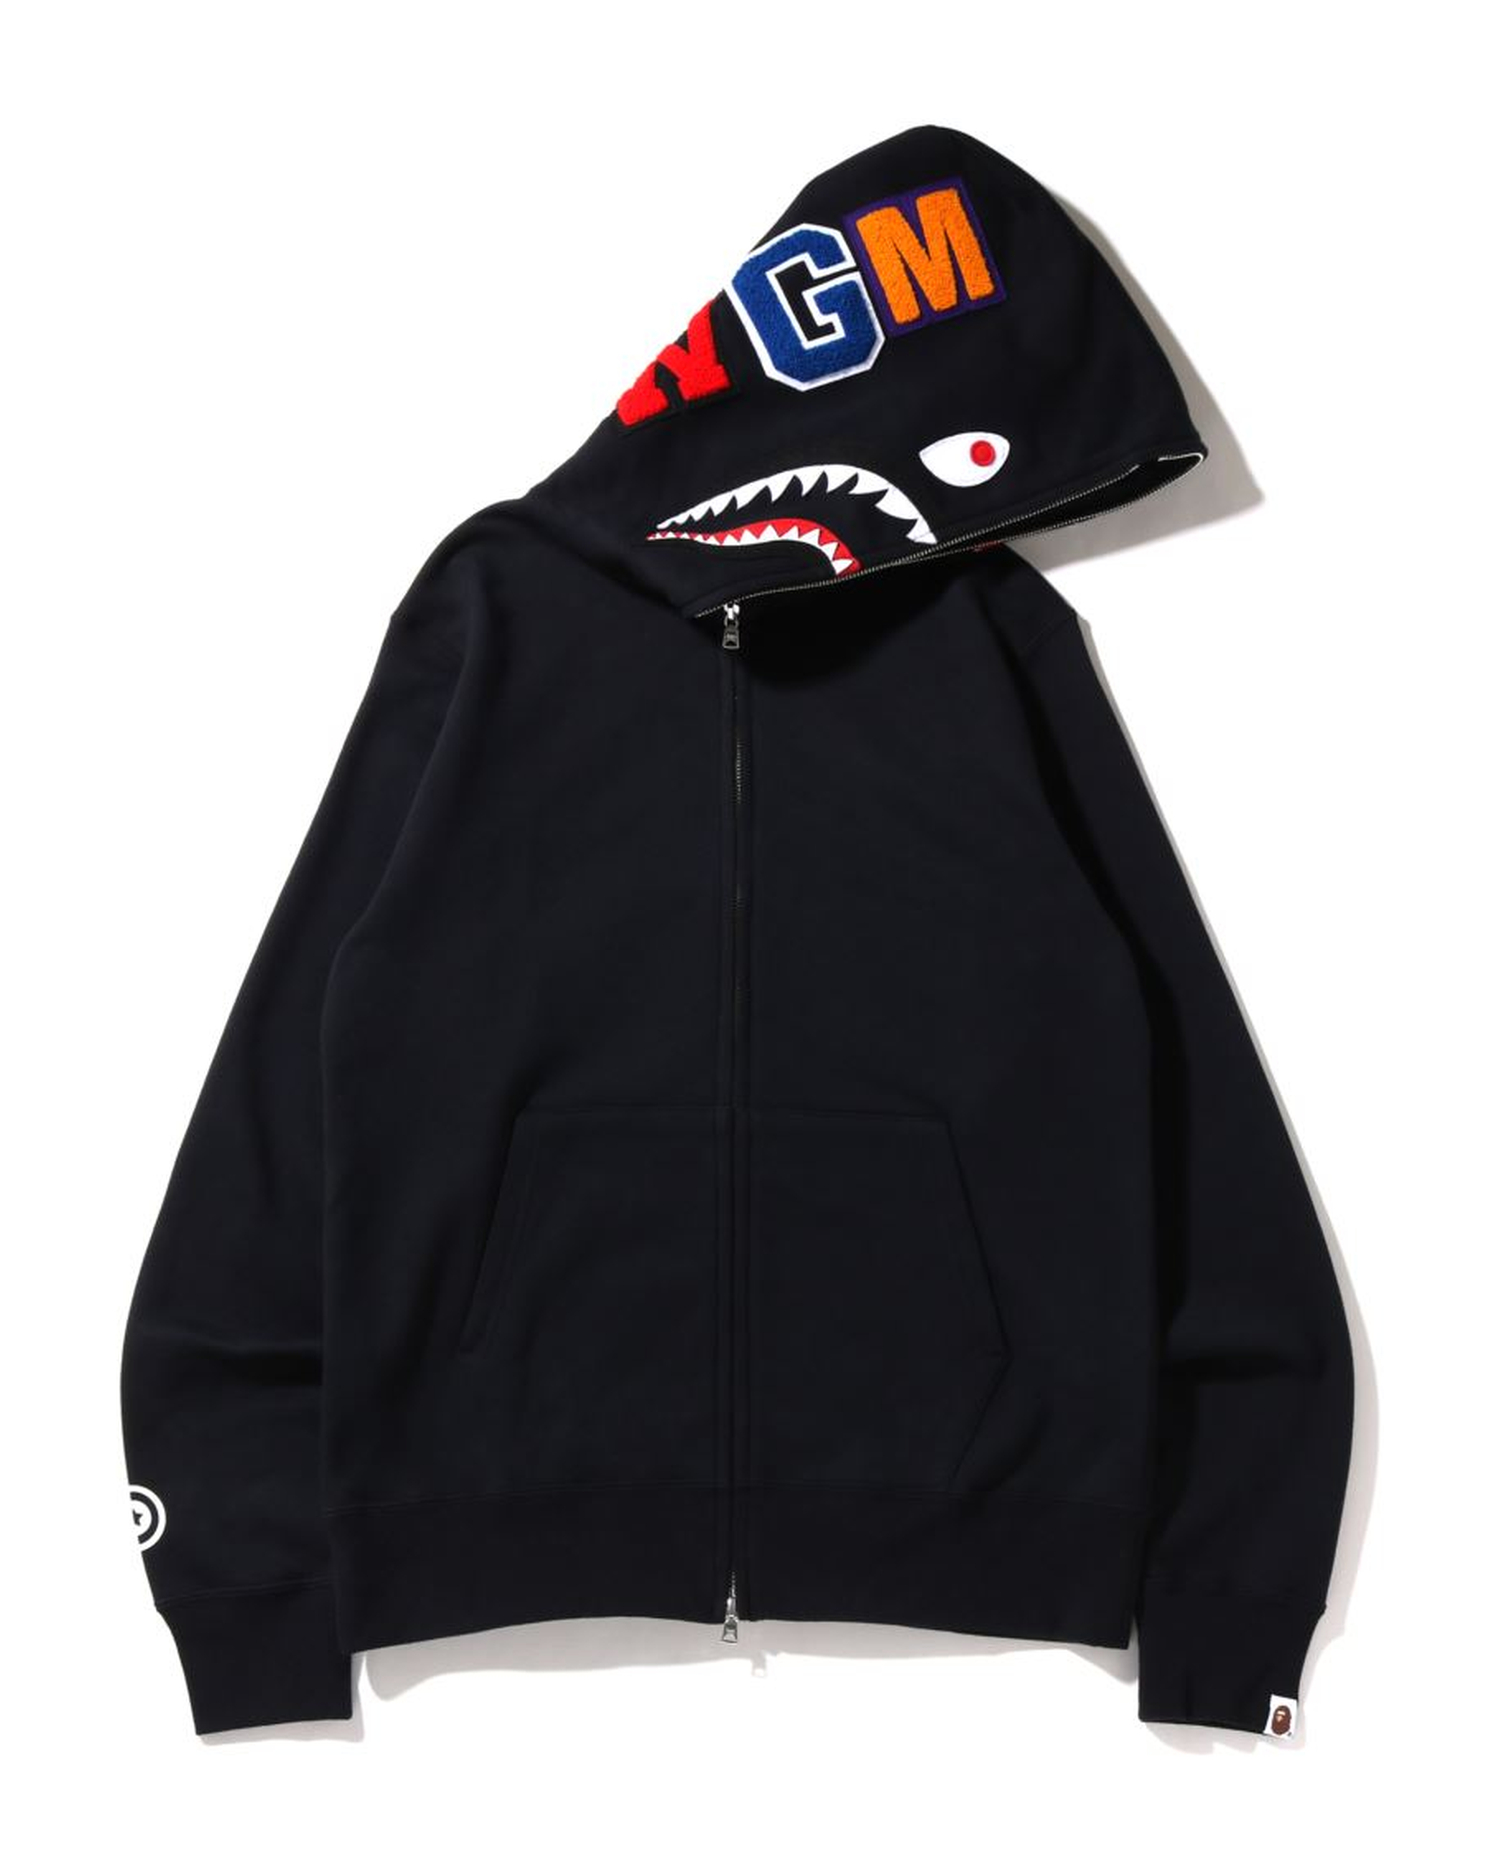 Shop Shark Full Zip Hoodie Online | BAPE